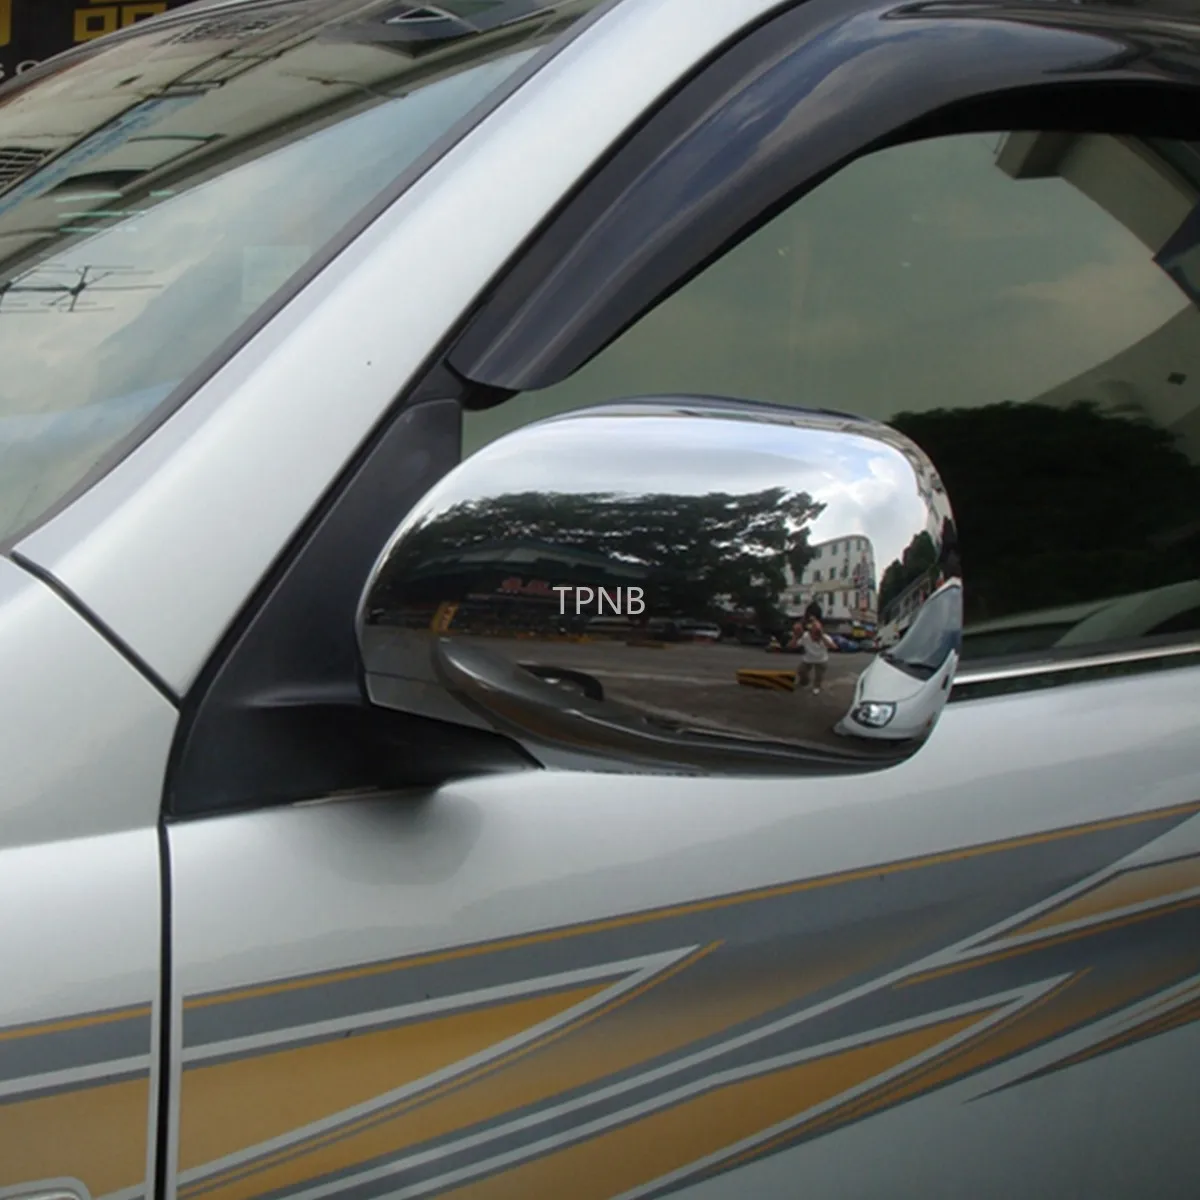 Chrome Wing Mirror Cover Set Fits Clio Land Cruiser Prado 120 Both Sides 2007+